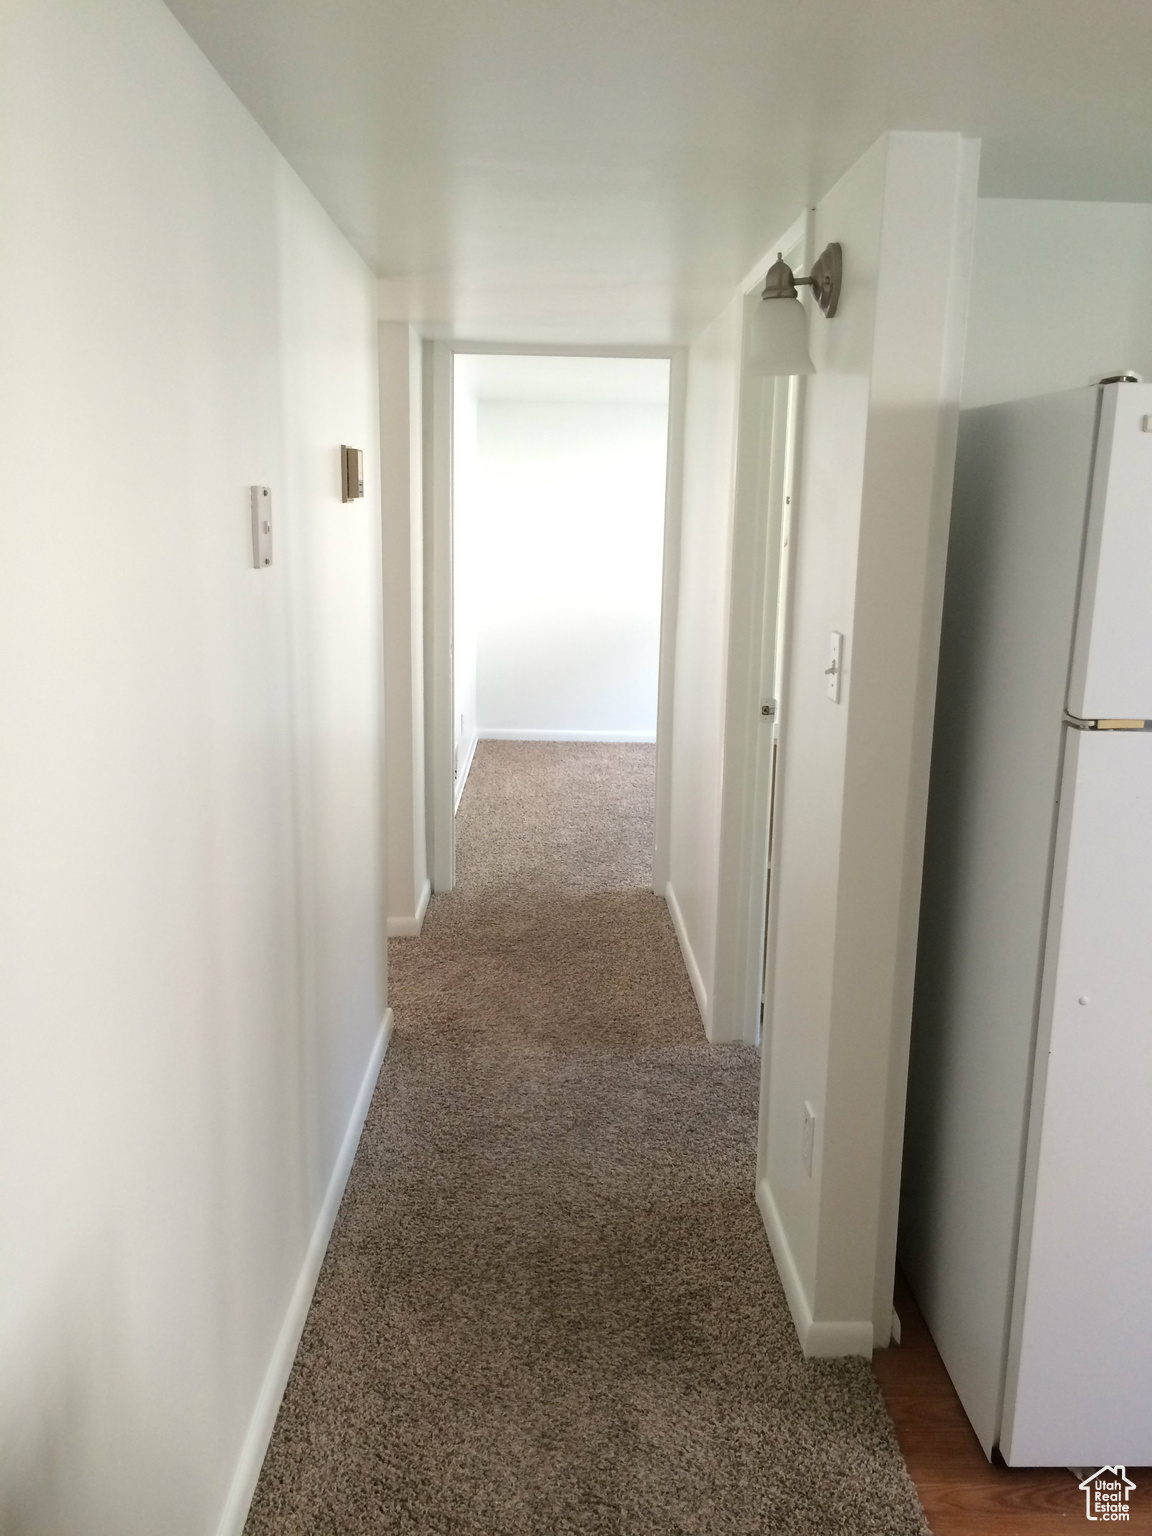 Hall featuring carpet floors